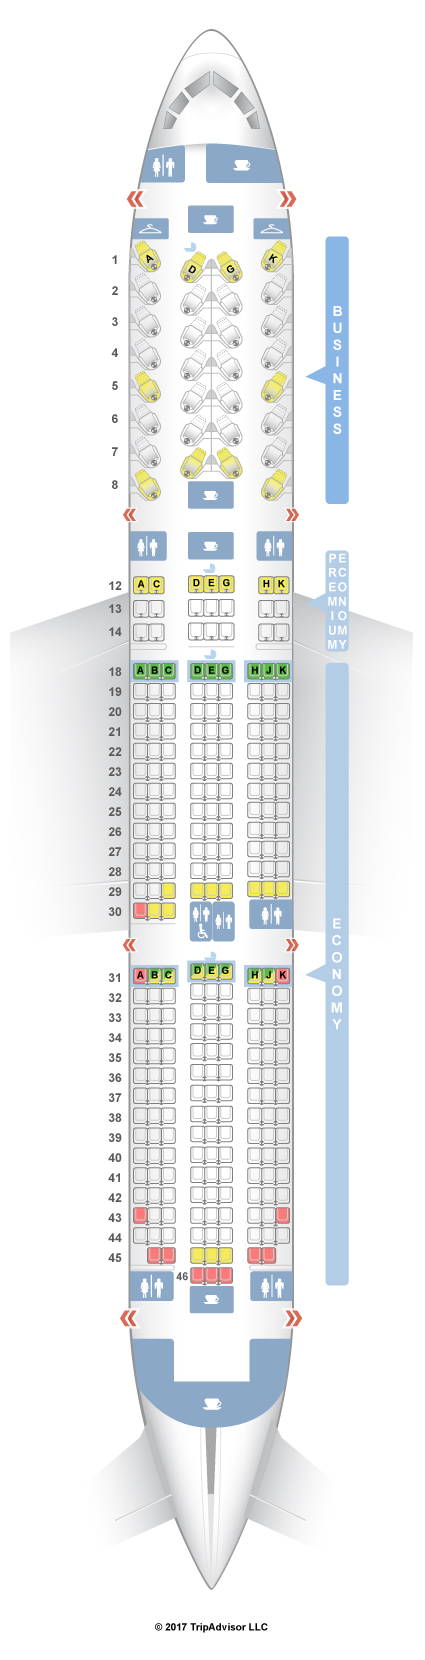 Seatguru Seat Map Air Canada Boeing 787 9 789